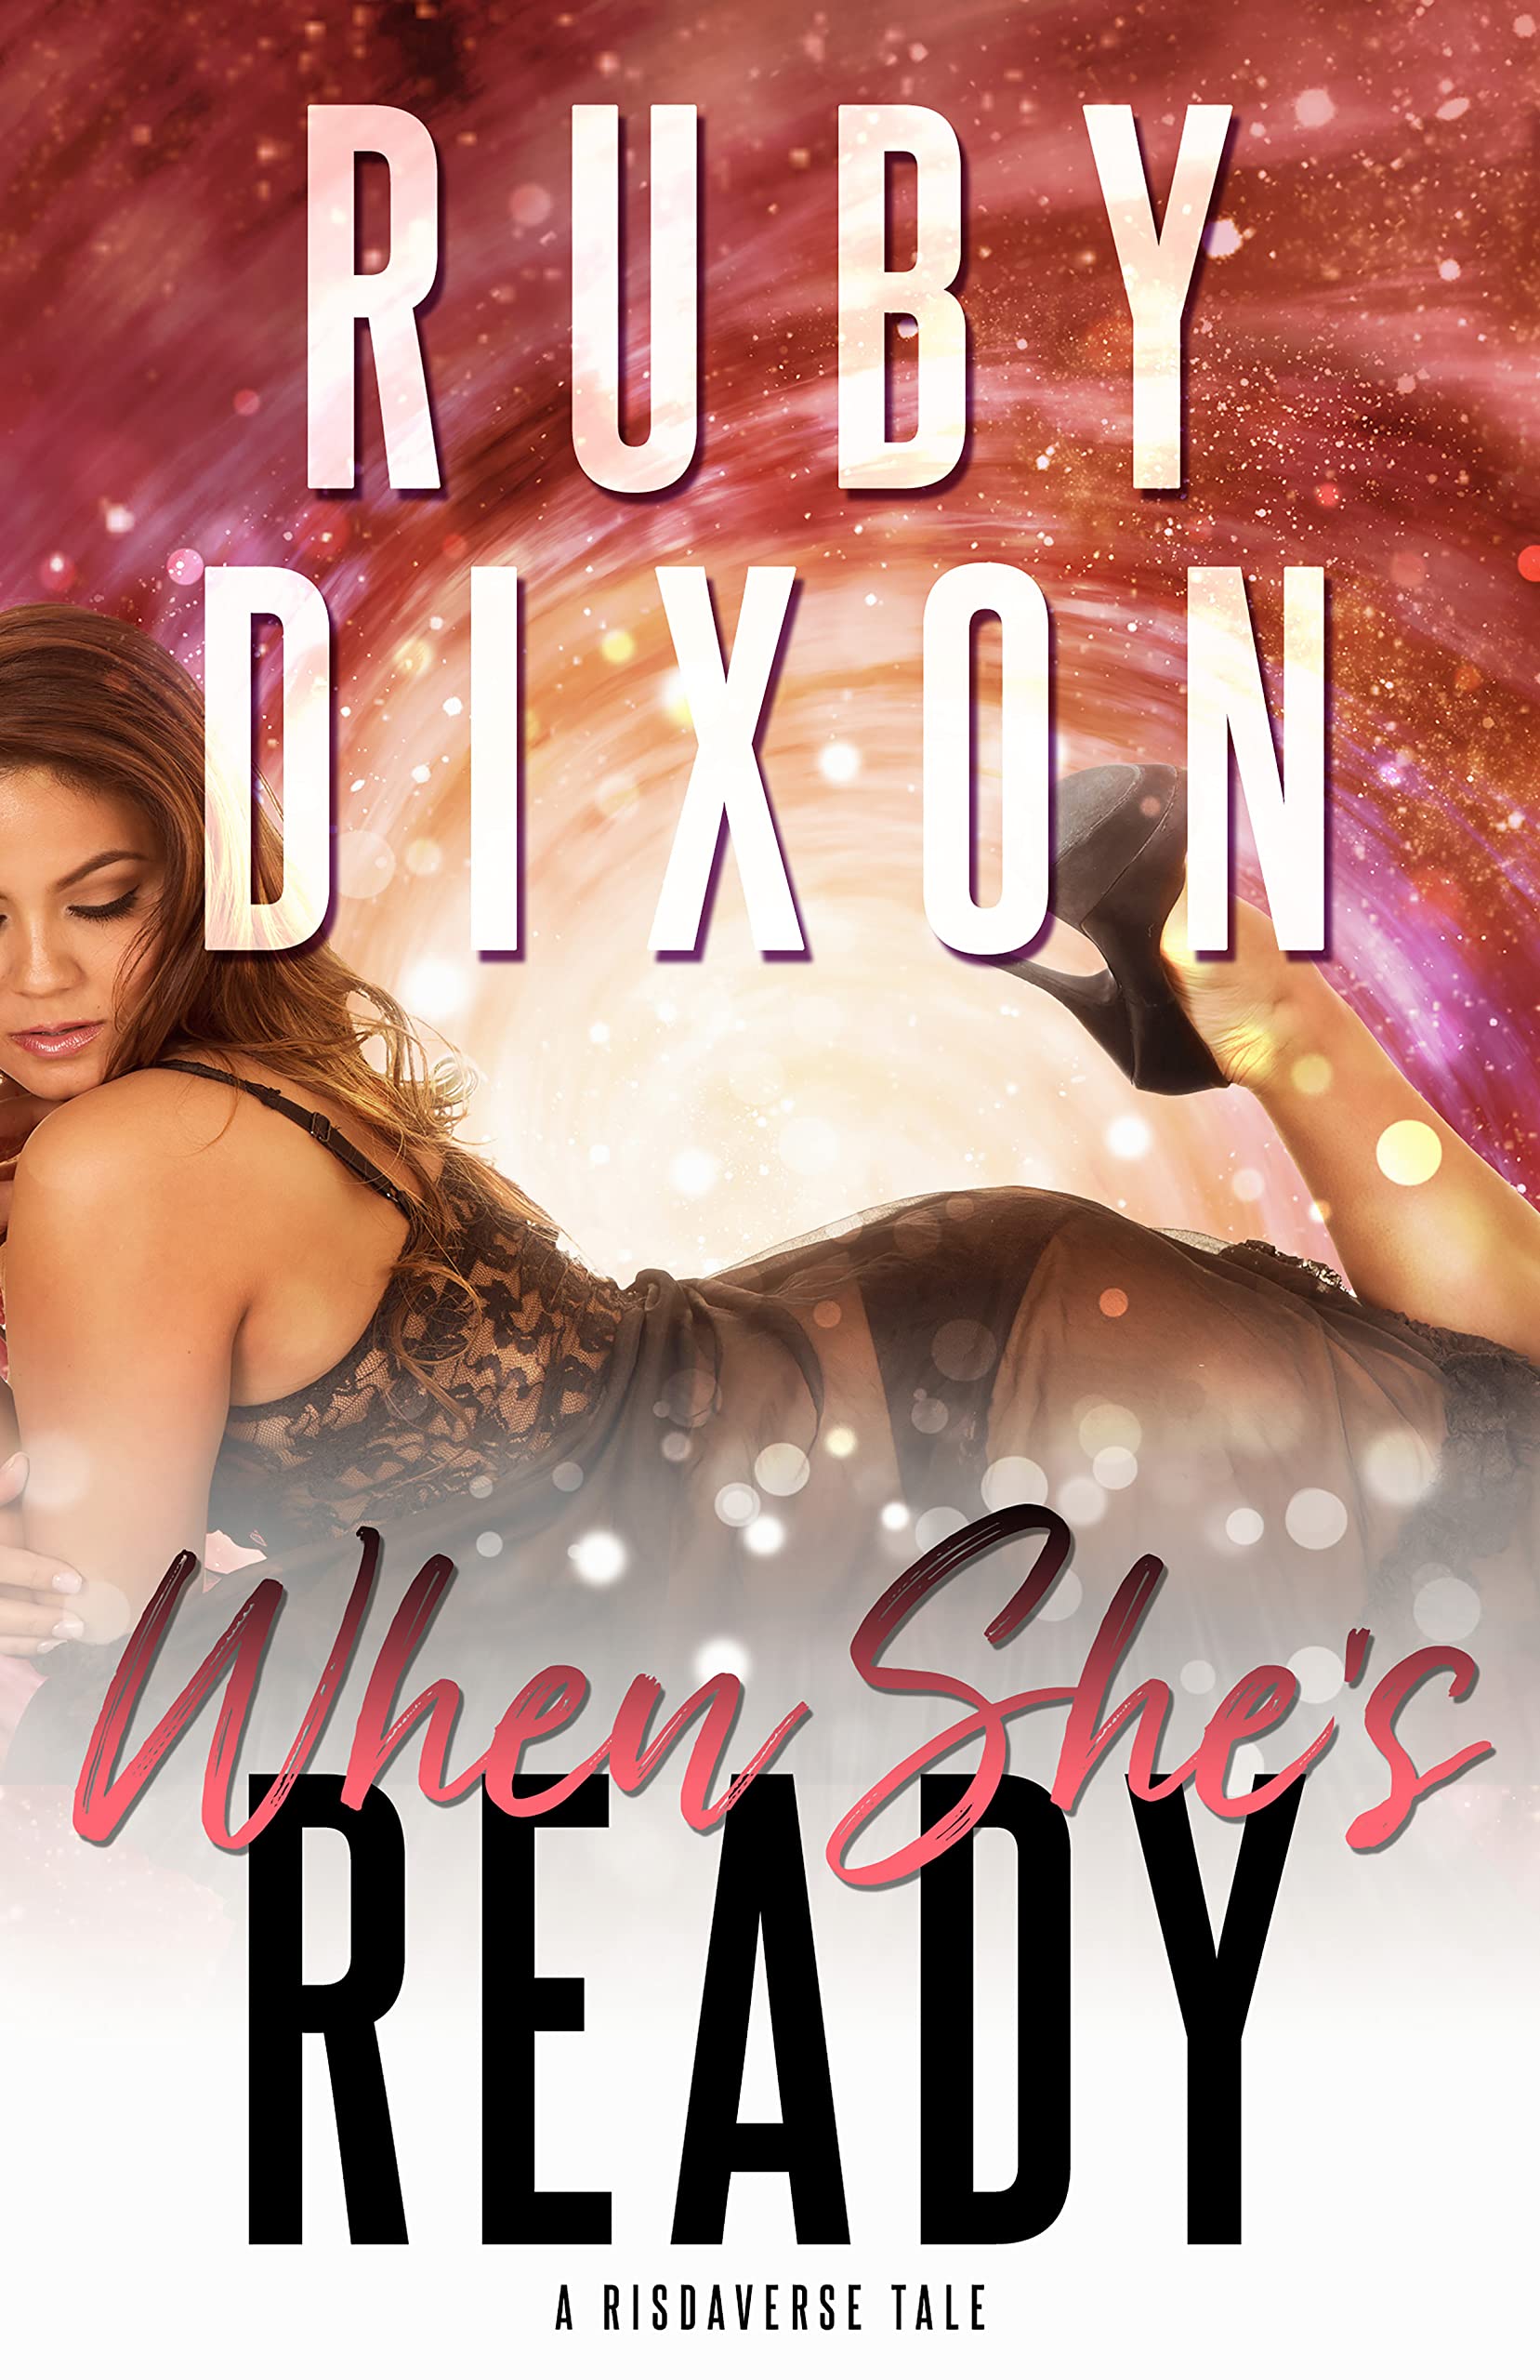 Book Cover When She's Ready: A Sci-Fi Alien Romance Novella